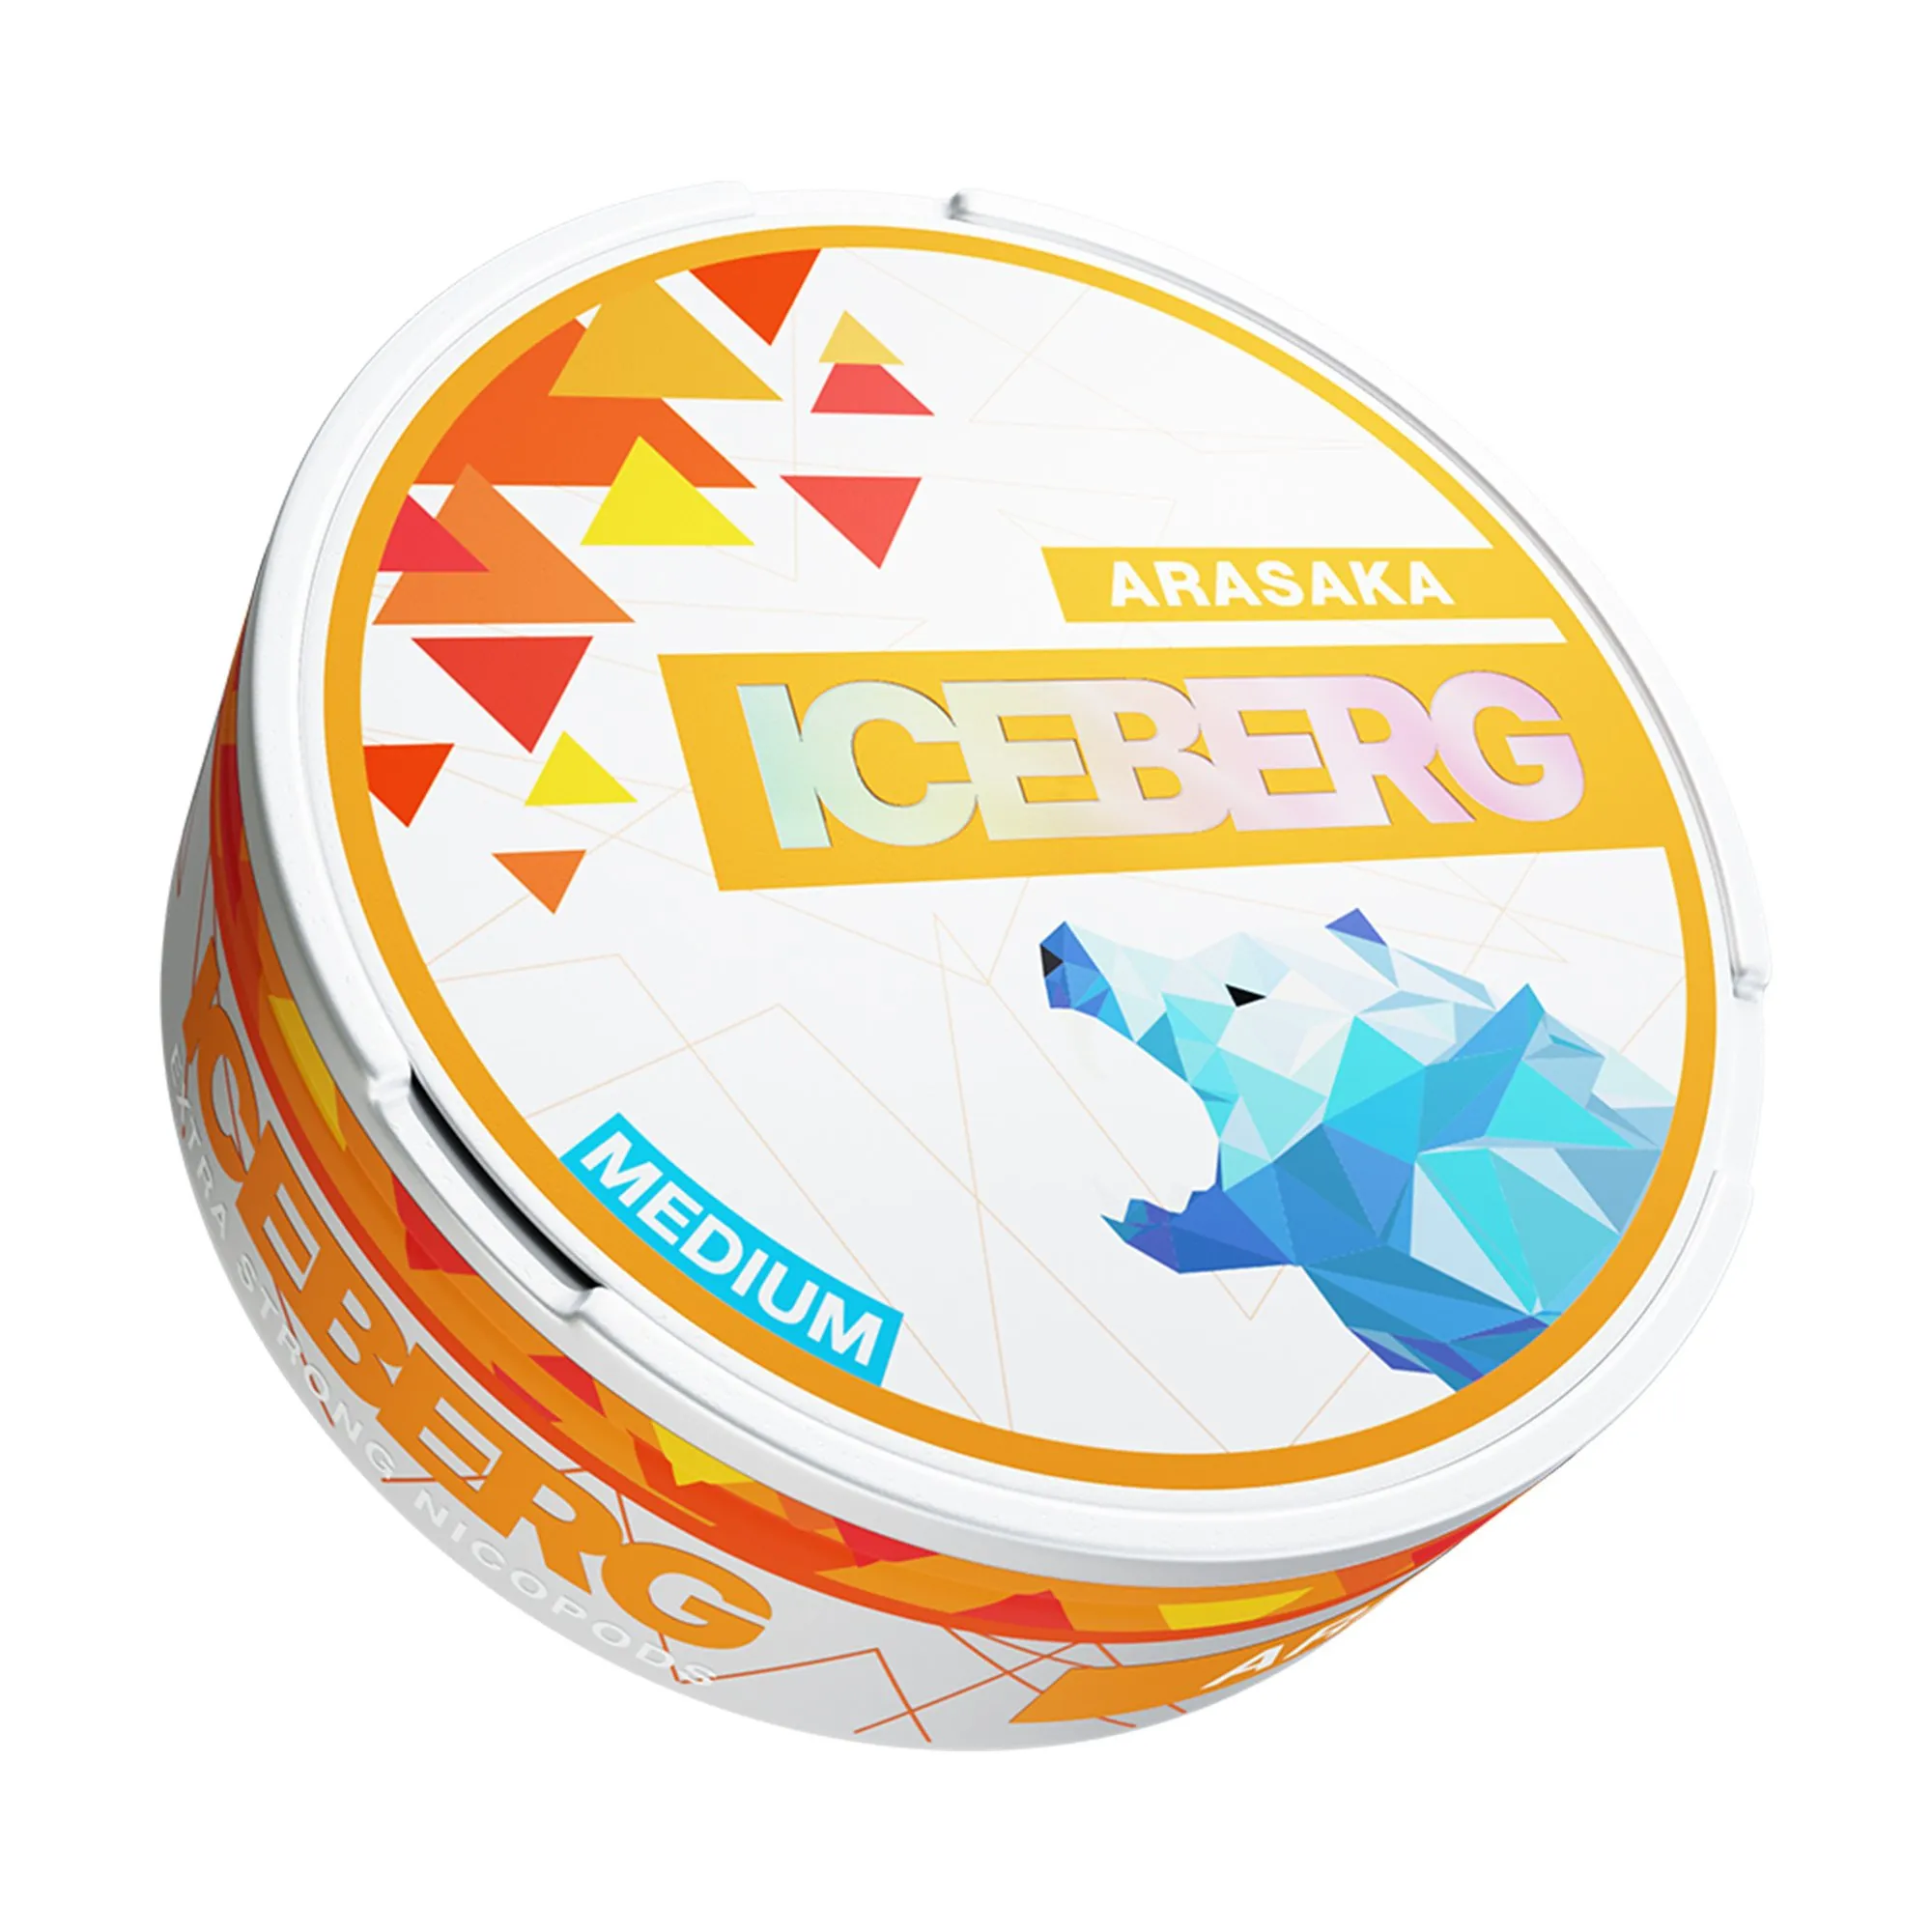 Iceberg Arasaka Medium